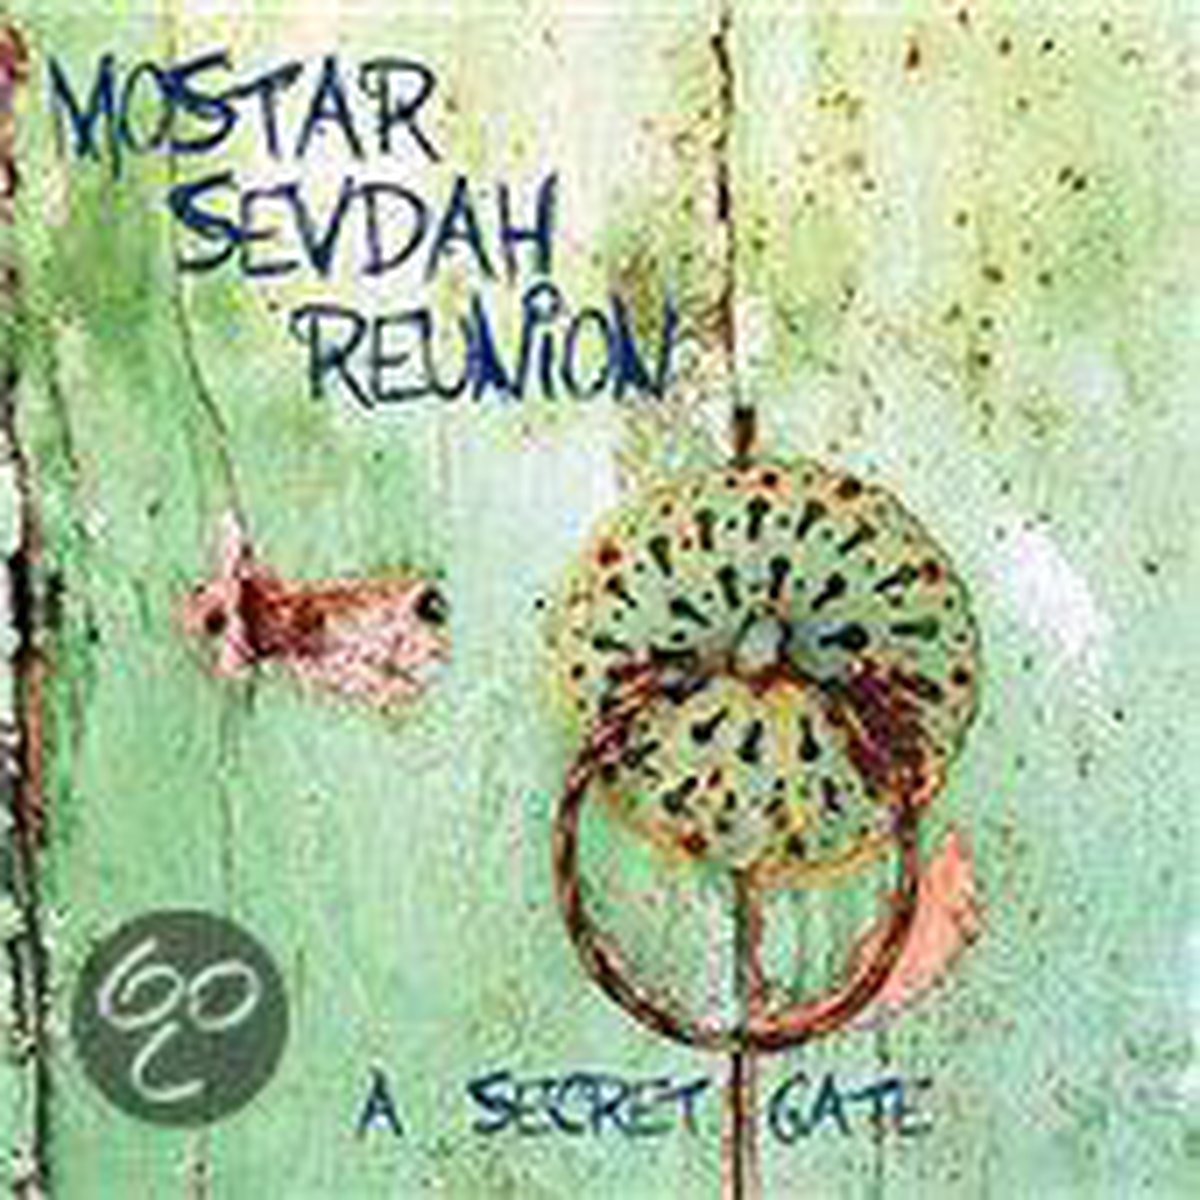 Secret Gate - Mostar Sevdah Reunion